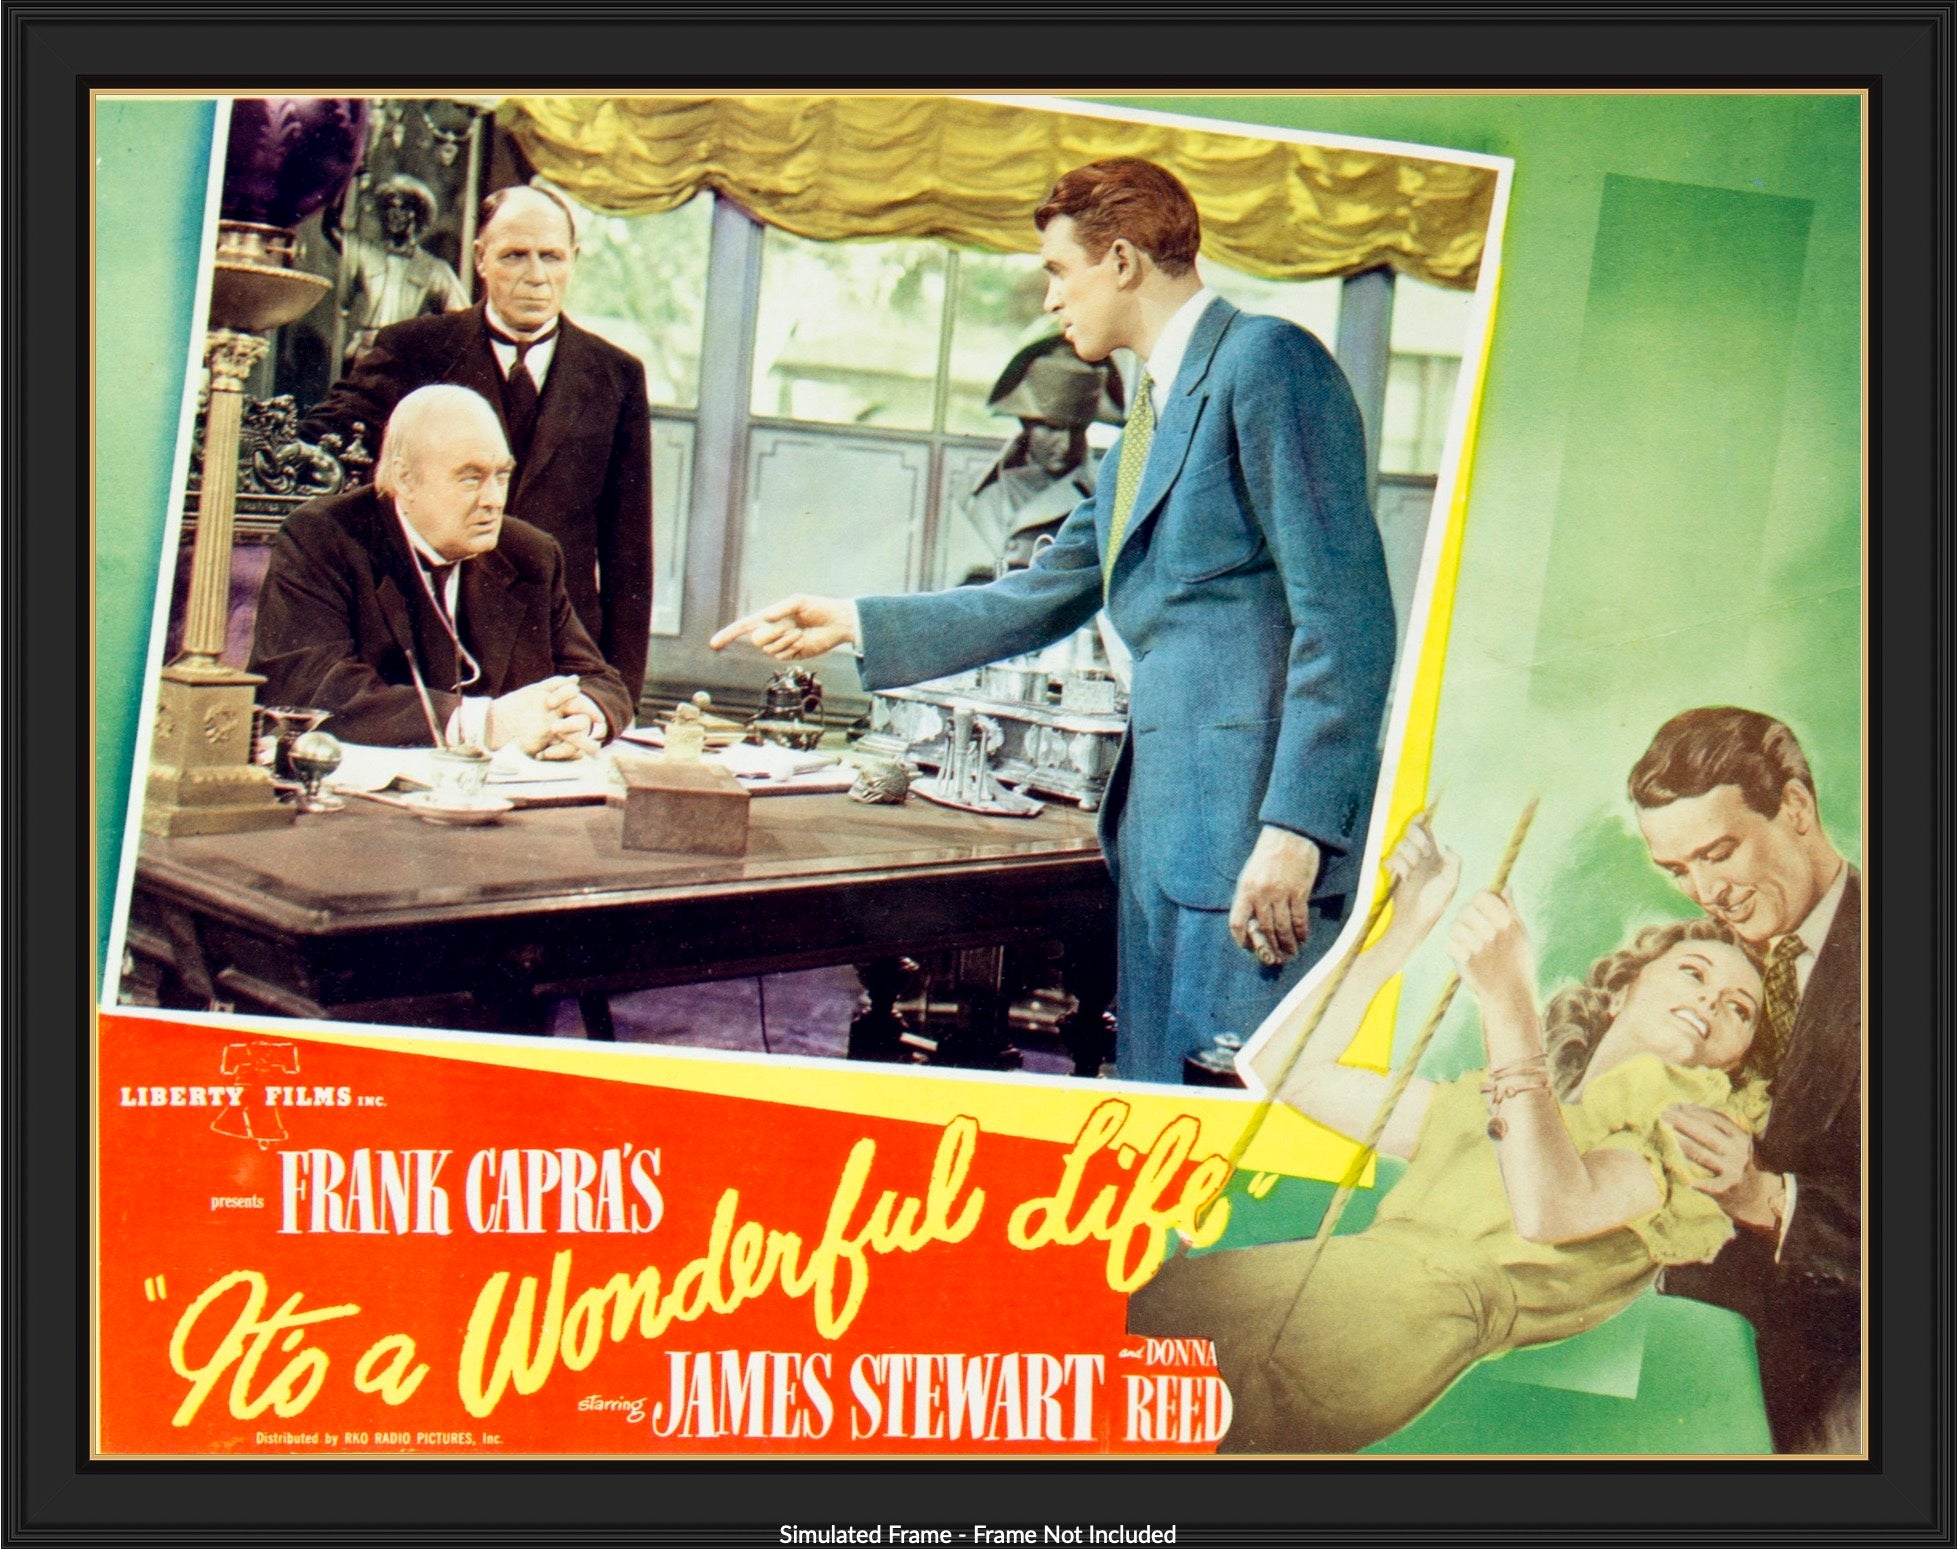 It's a Wonderful Life (1946) original movie poster for sale at Original Film Art